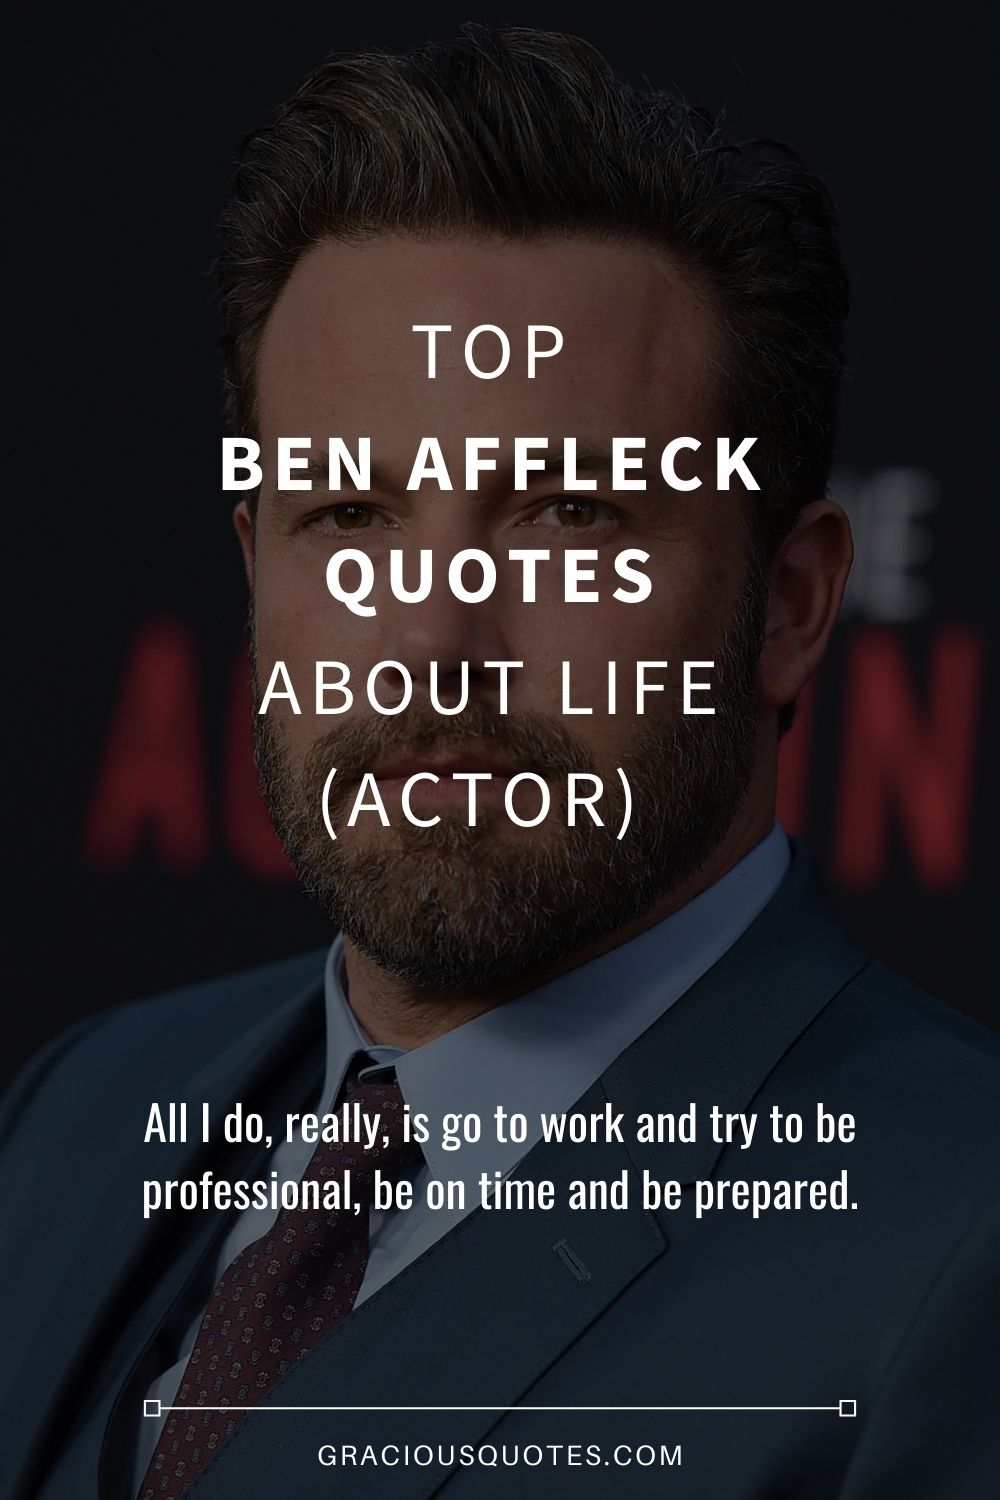 Top Ben Affleck Quotes About Life (ACTOR) - Gracious Quotes